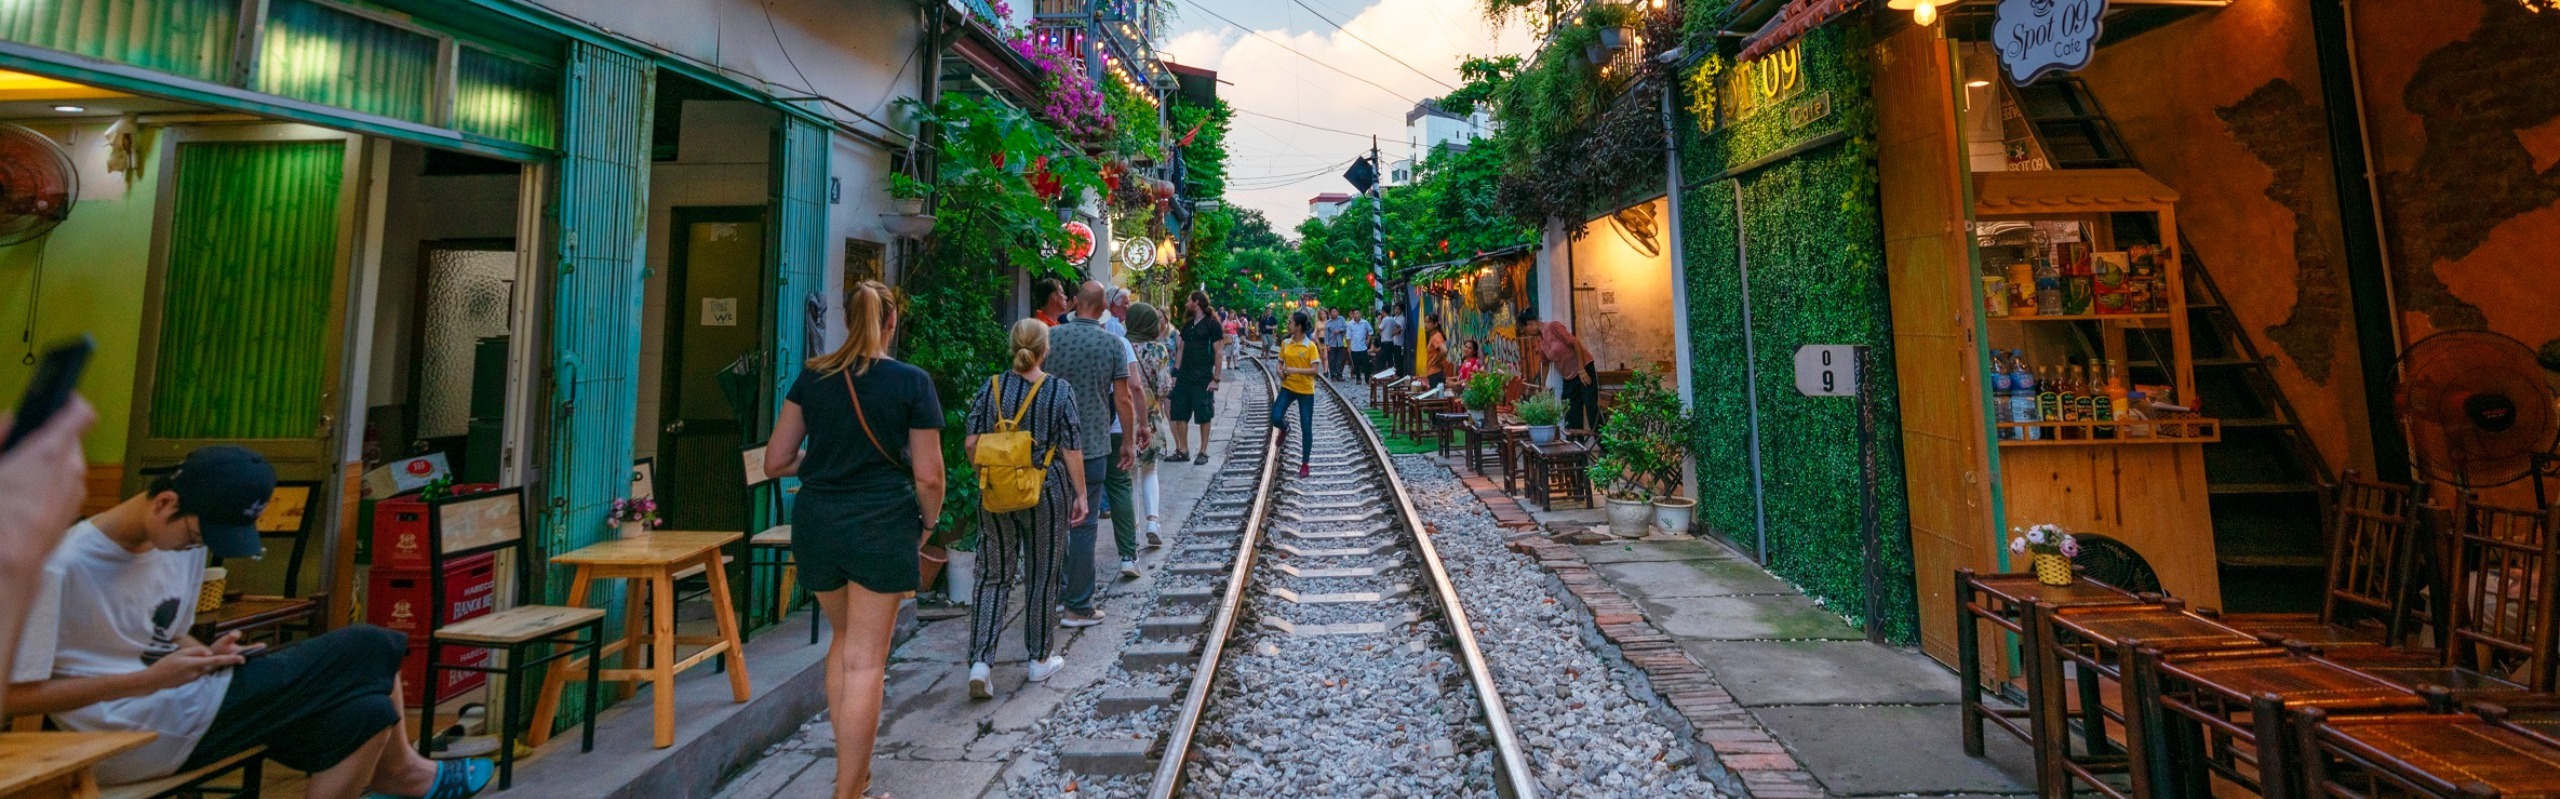 Planning Your First Trip to Vietnam